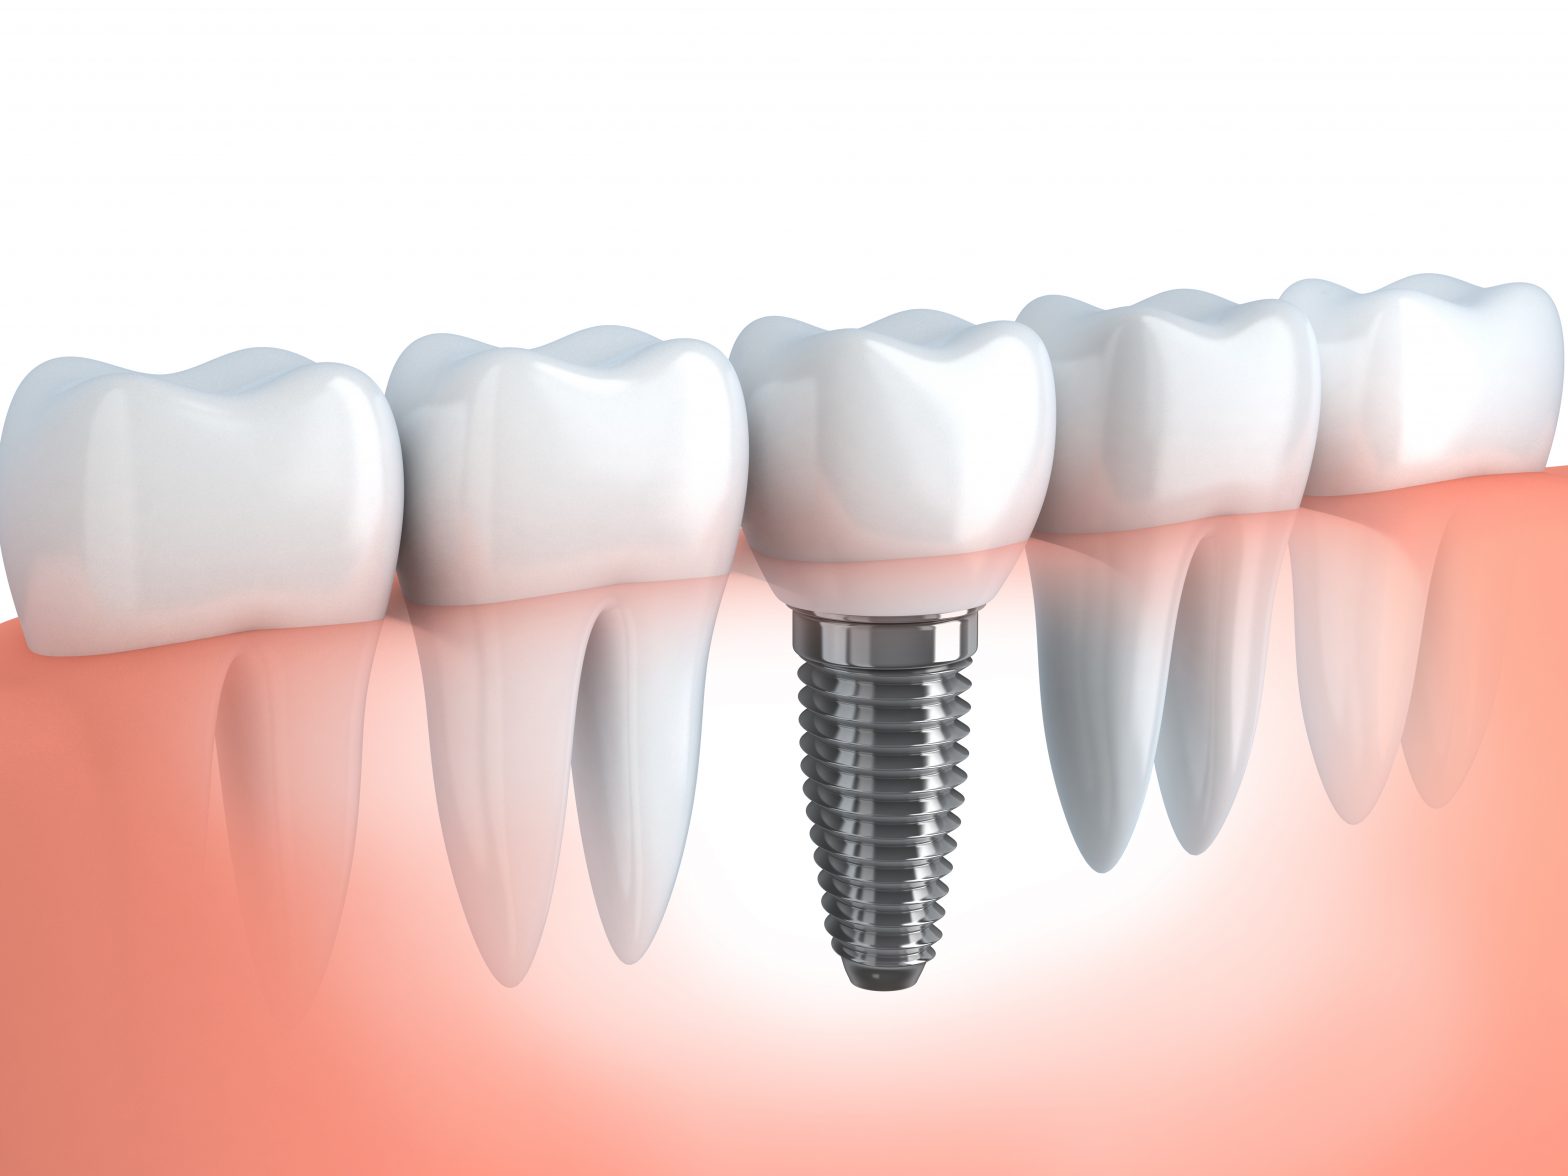 6 Common Dental Implant FAQsGregory skeens d.d.s.encinitas family dentistry